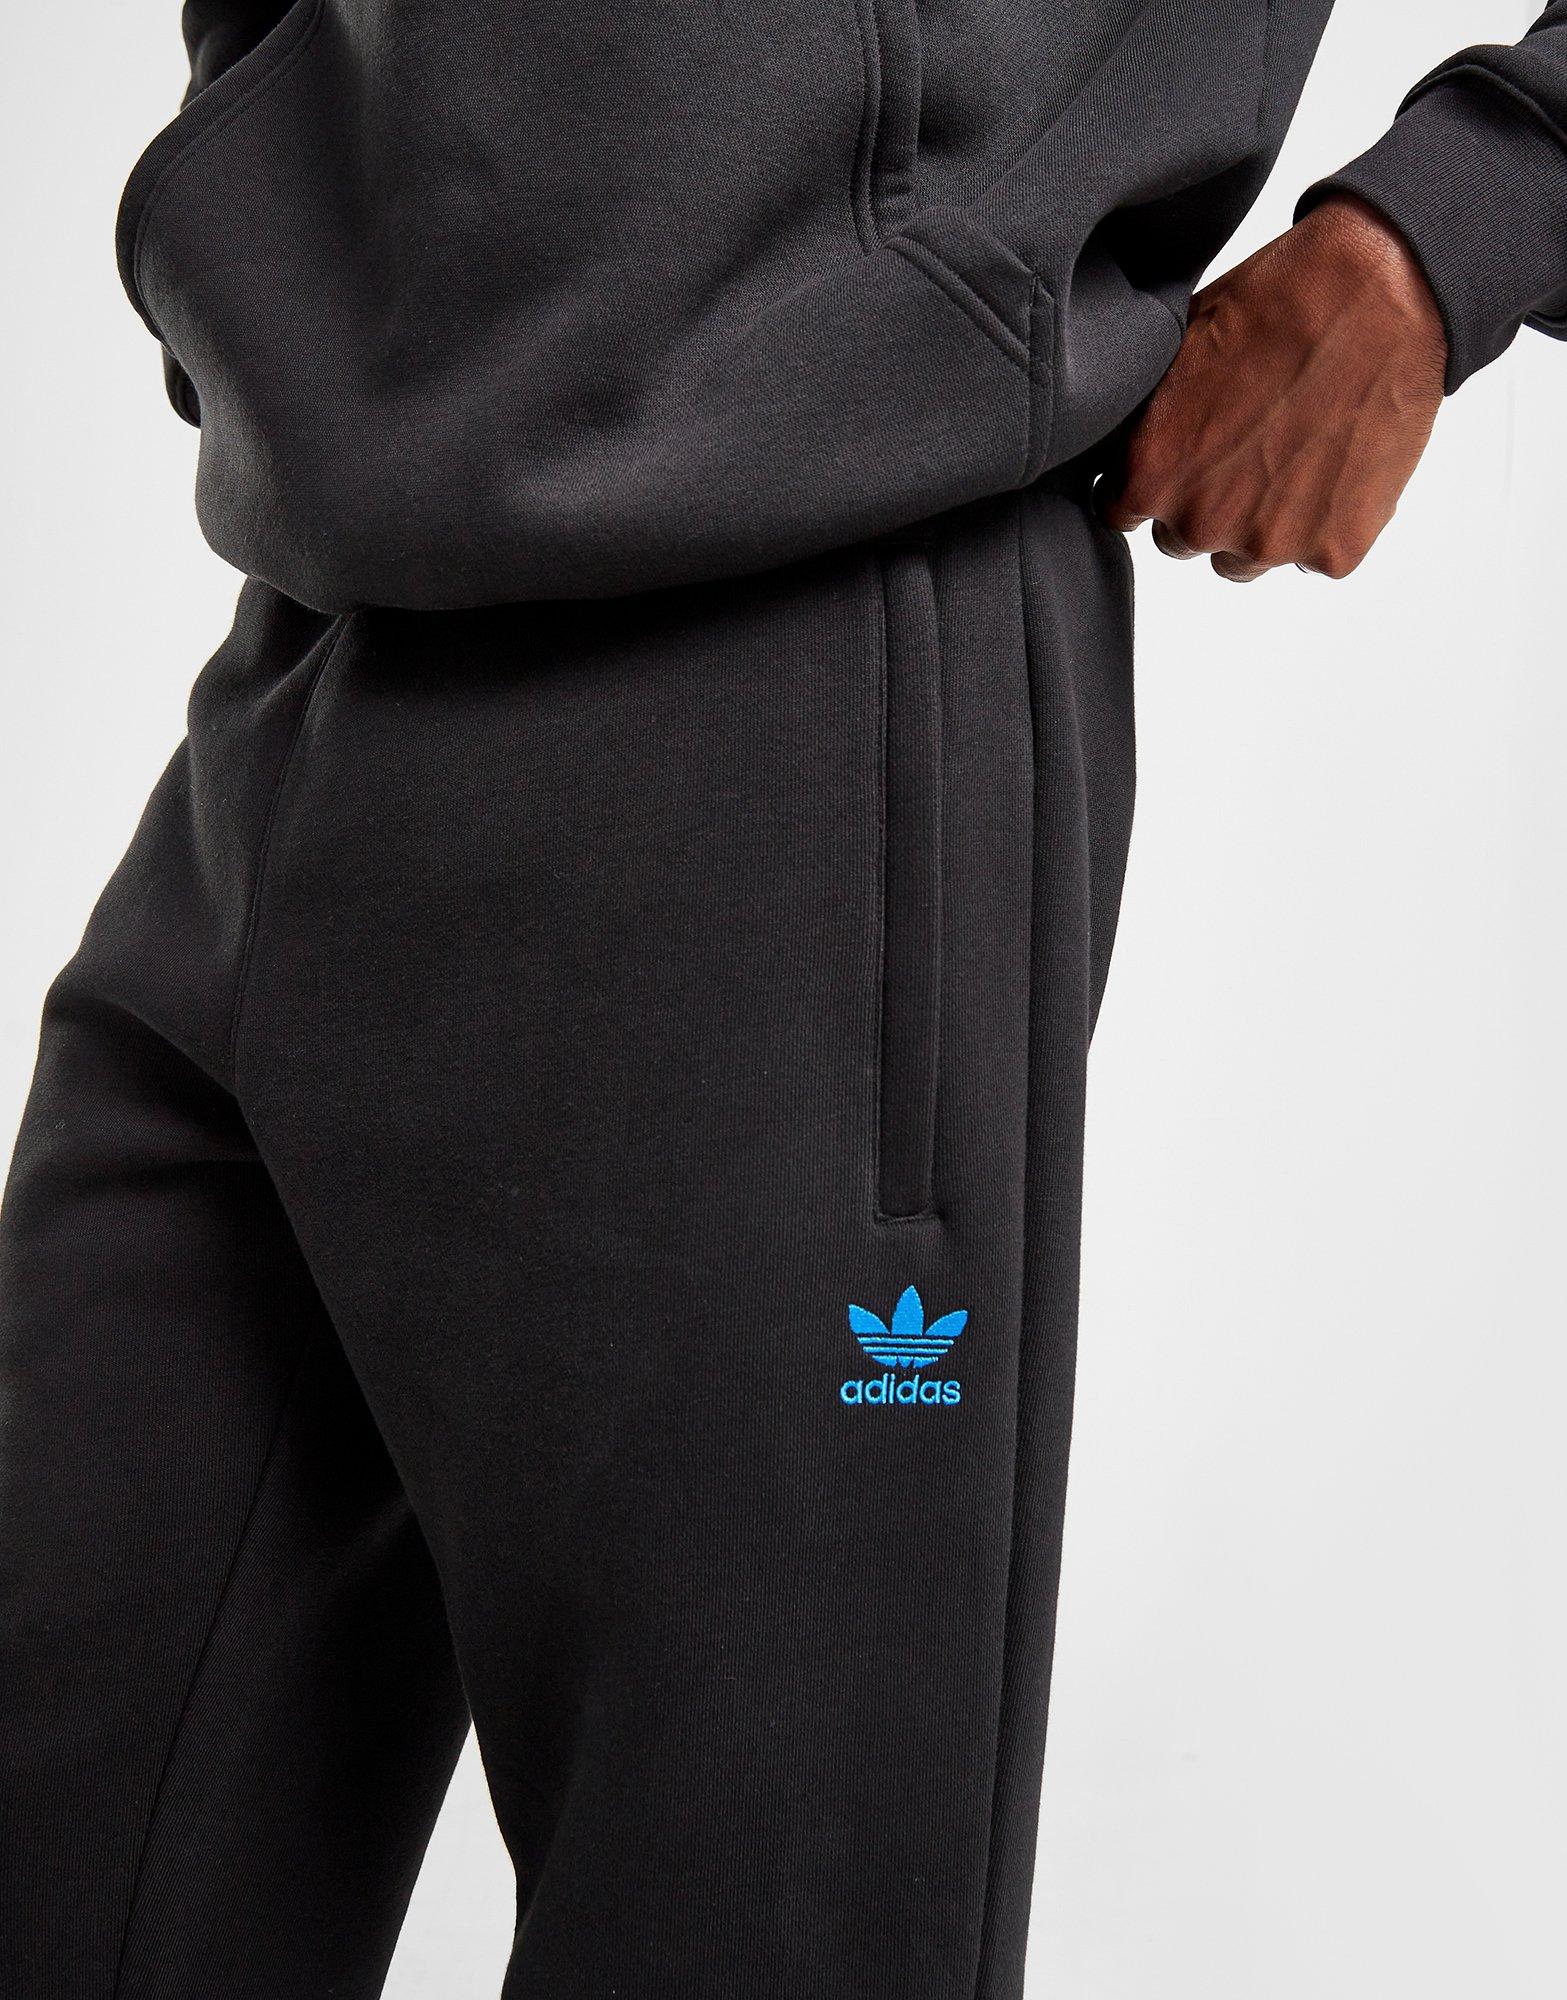 Originals - Global Joggers adidas Adicolor Essentials Trefoil JD Black Sports Fleece